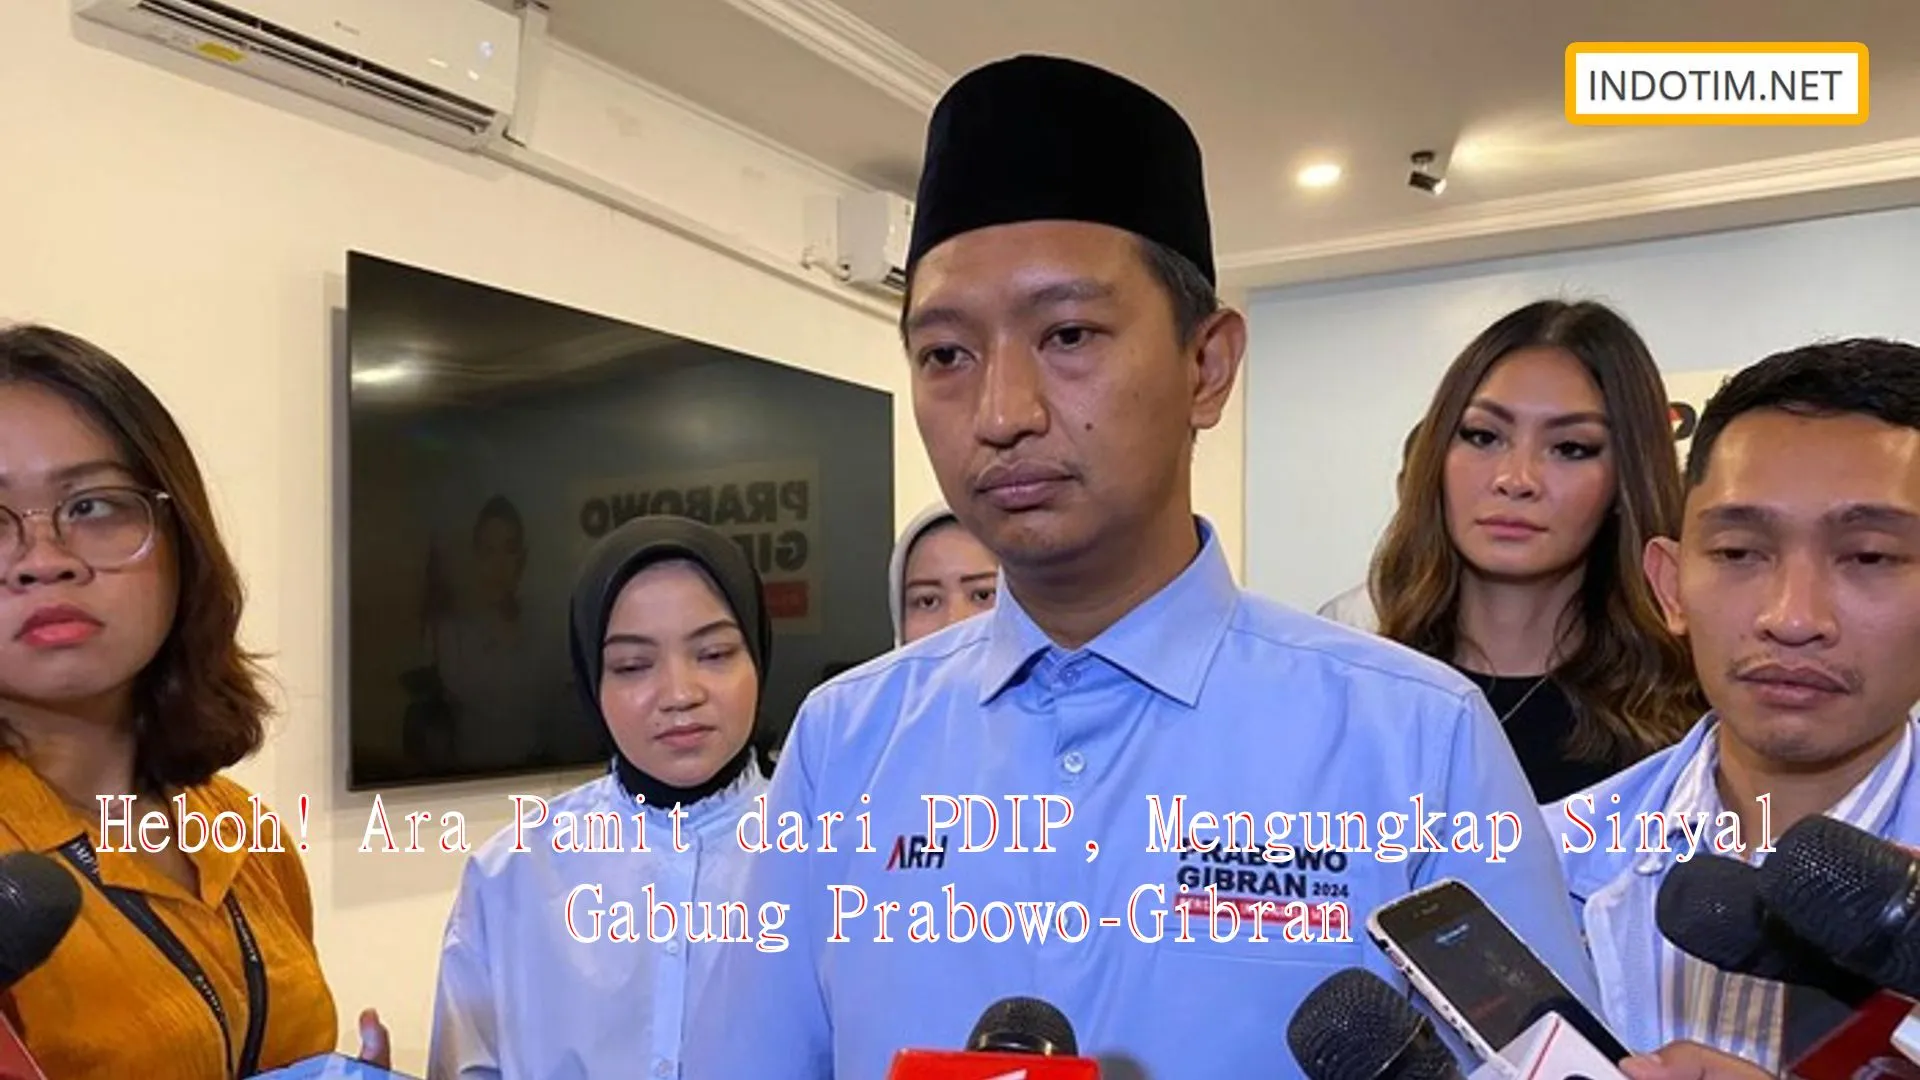 Heboh! Ara Pamit dari PDIP, Mengungkap Sinyal Gabung Prabowo-Gibran